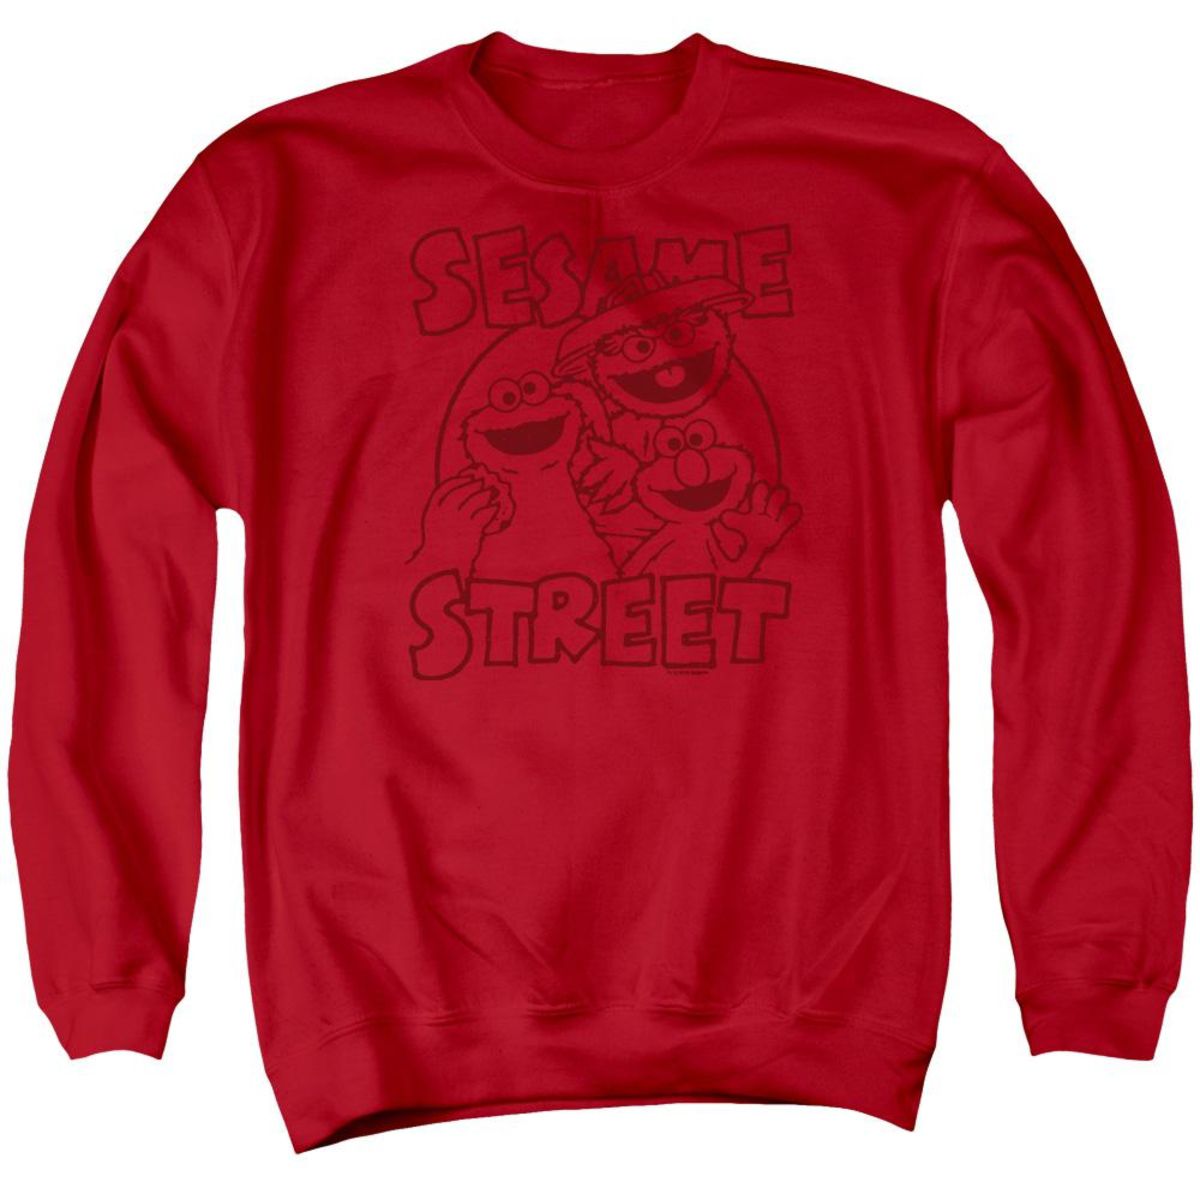 Sesame Street Group Crunch Adult Crewneck Sweatshirt Licensed Character